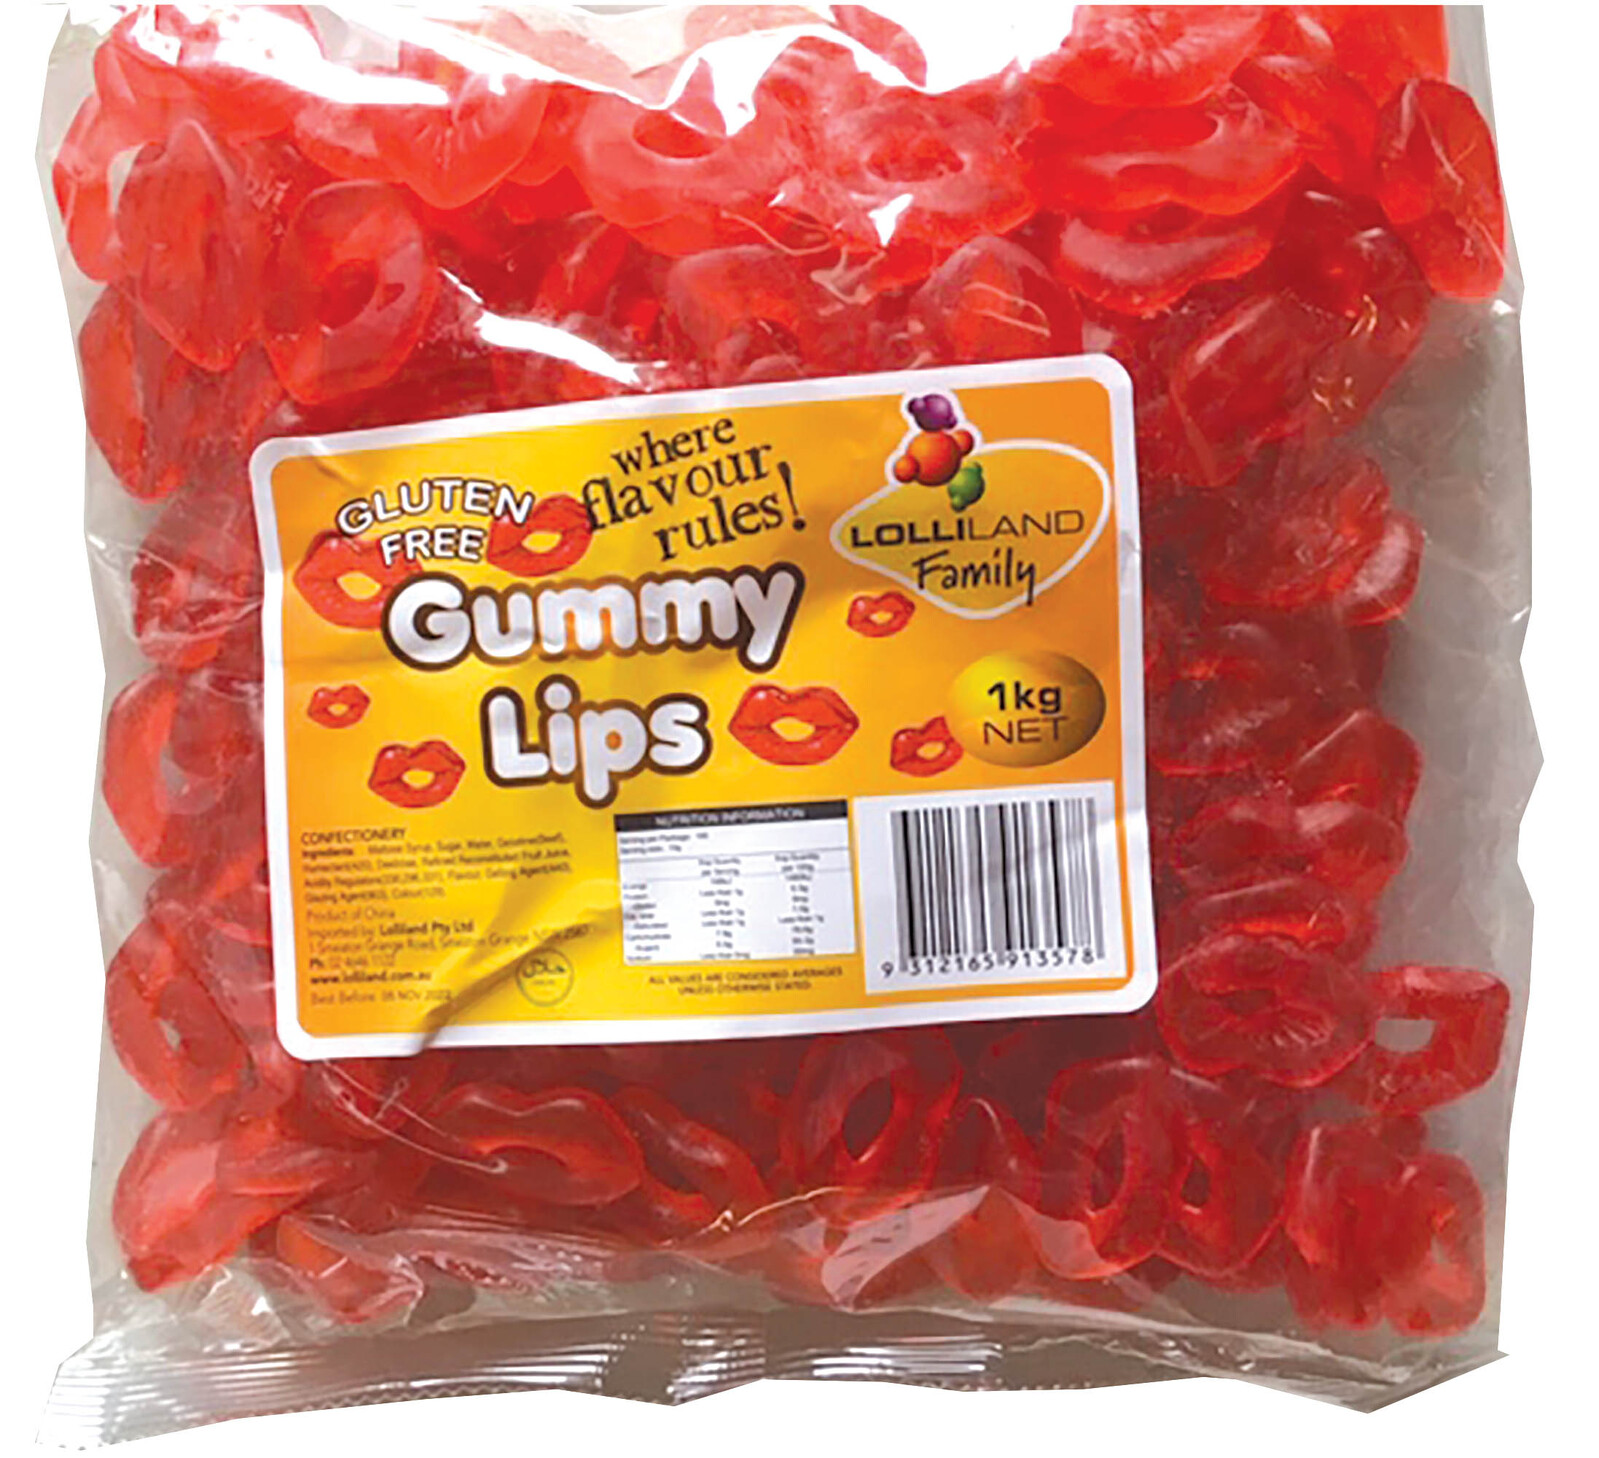 Gummi Lips - Gluten Free 1kg Bulk Lollies 